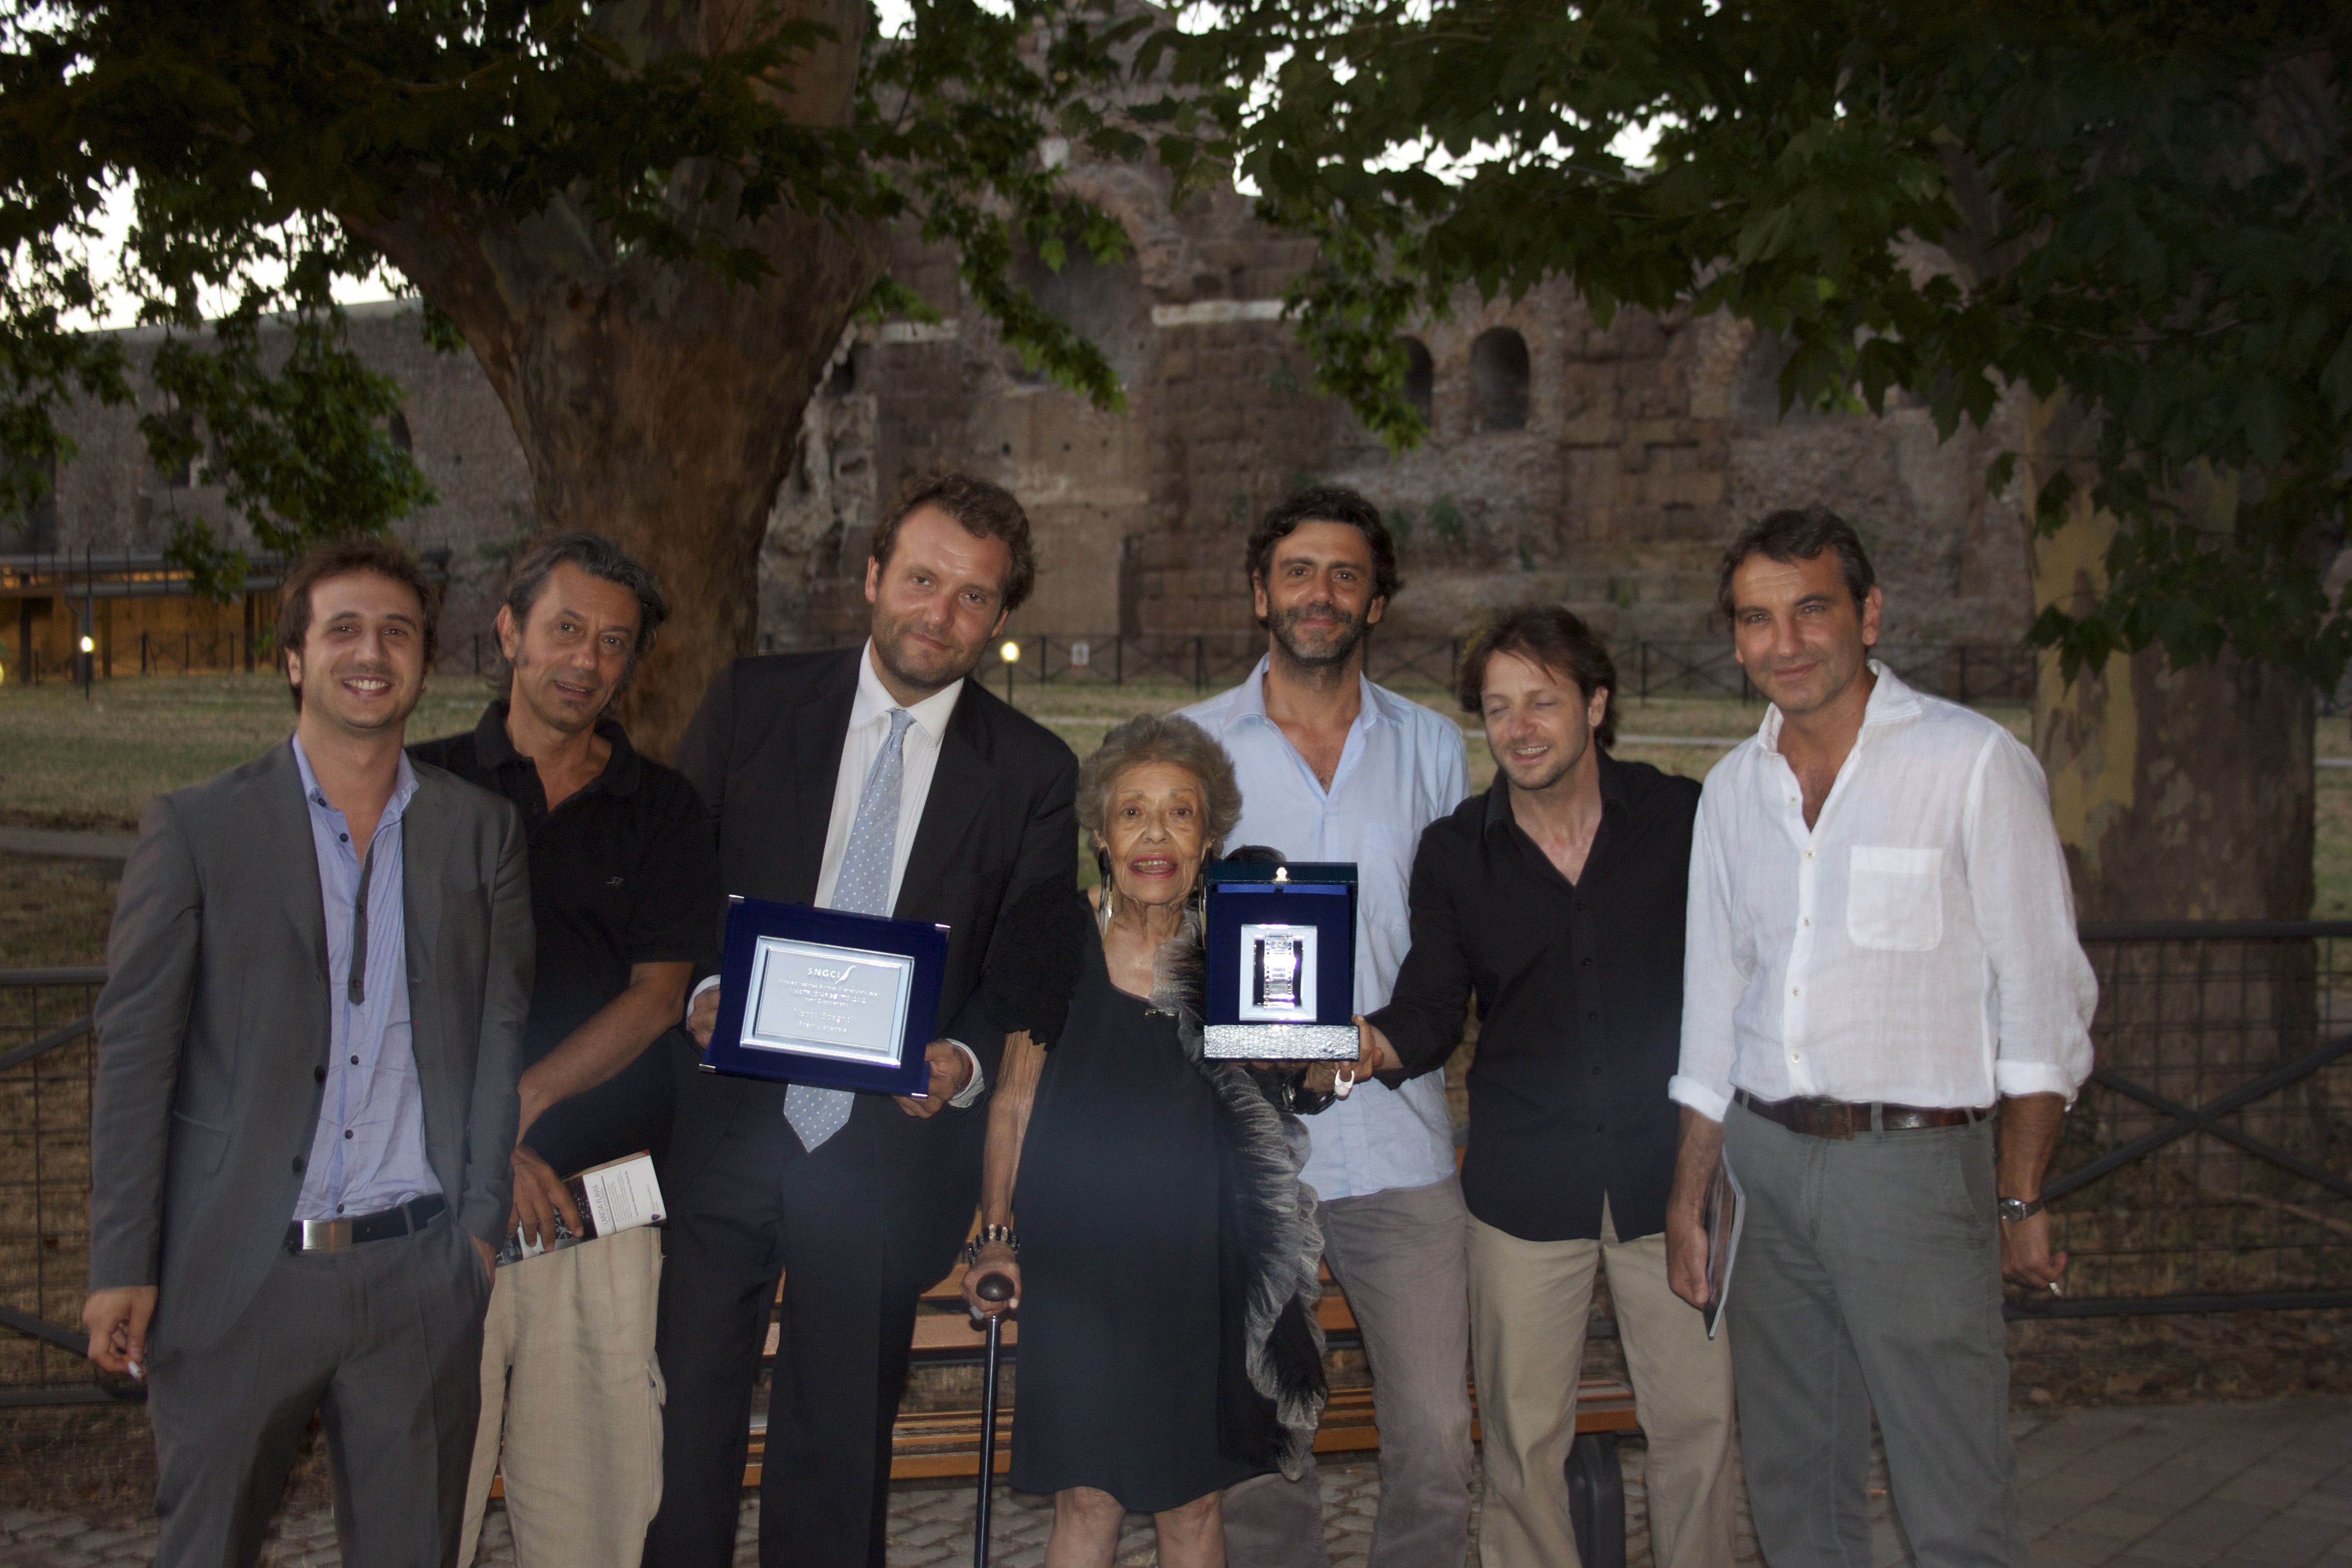 Silver Ribbon Award: Jacopo Reale, Pivio, Marco Spagnoli, Giovanna Cau, Luca Lucini e Paolo Monaci